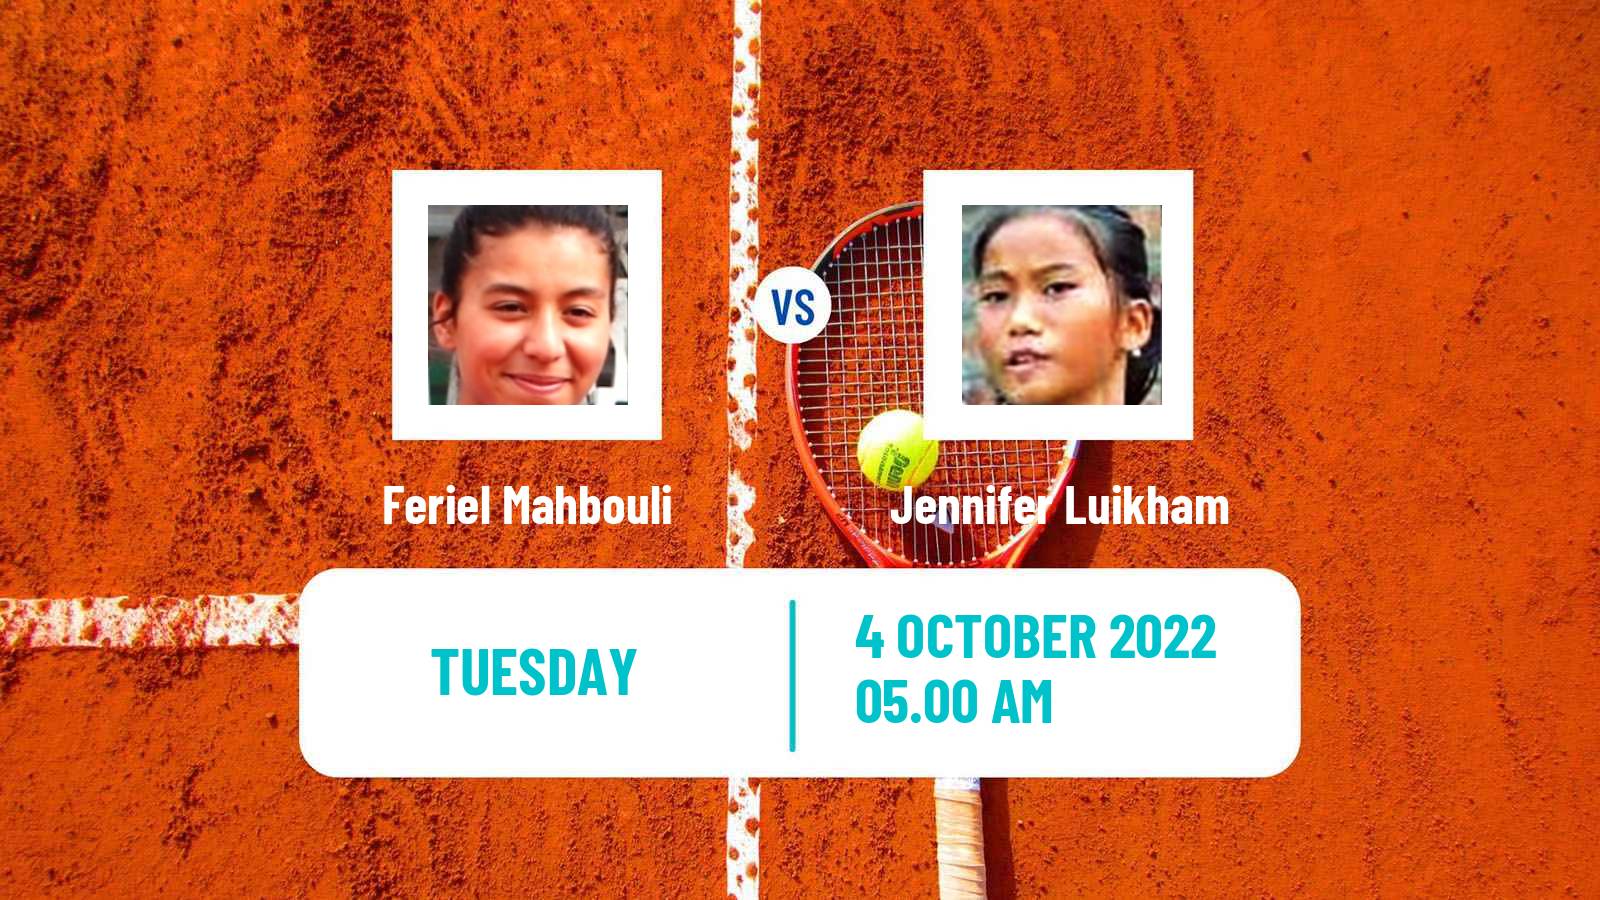 Tennis ITF Tournaments Feriel Mahbouli - Jennifer Luikham